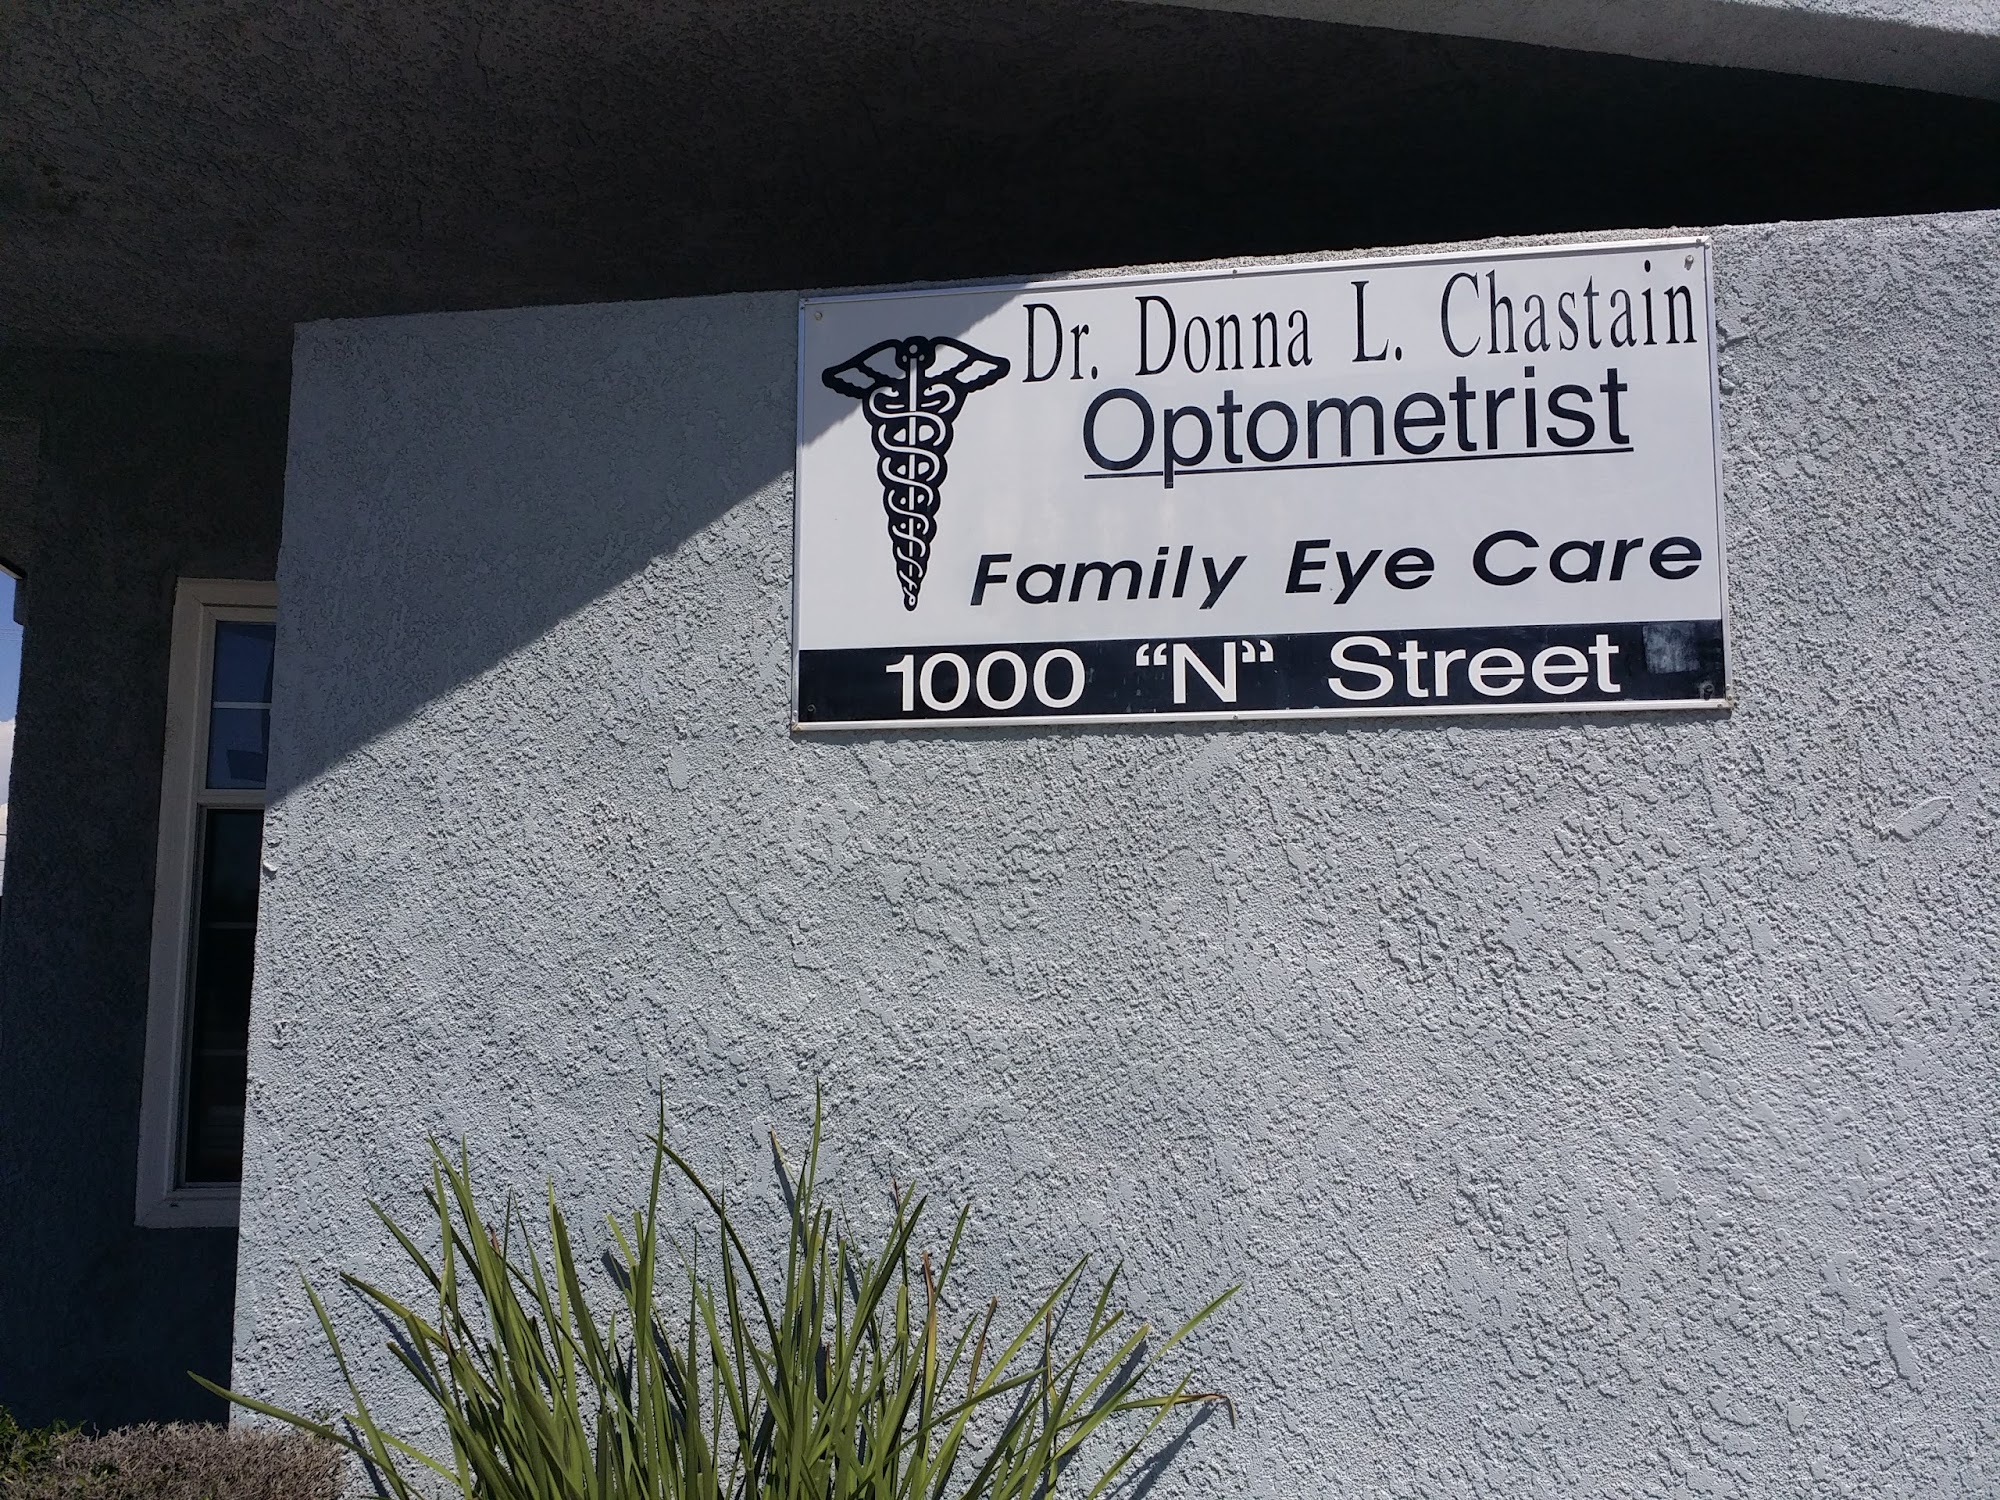 Donna L. Chastain, O.D. 1000 N St, Sanger California 93657